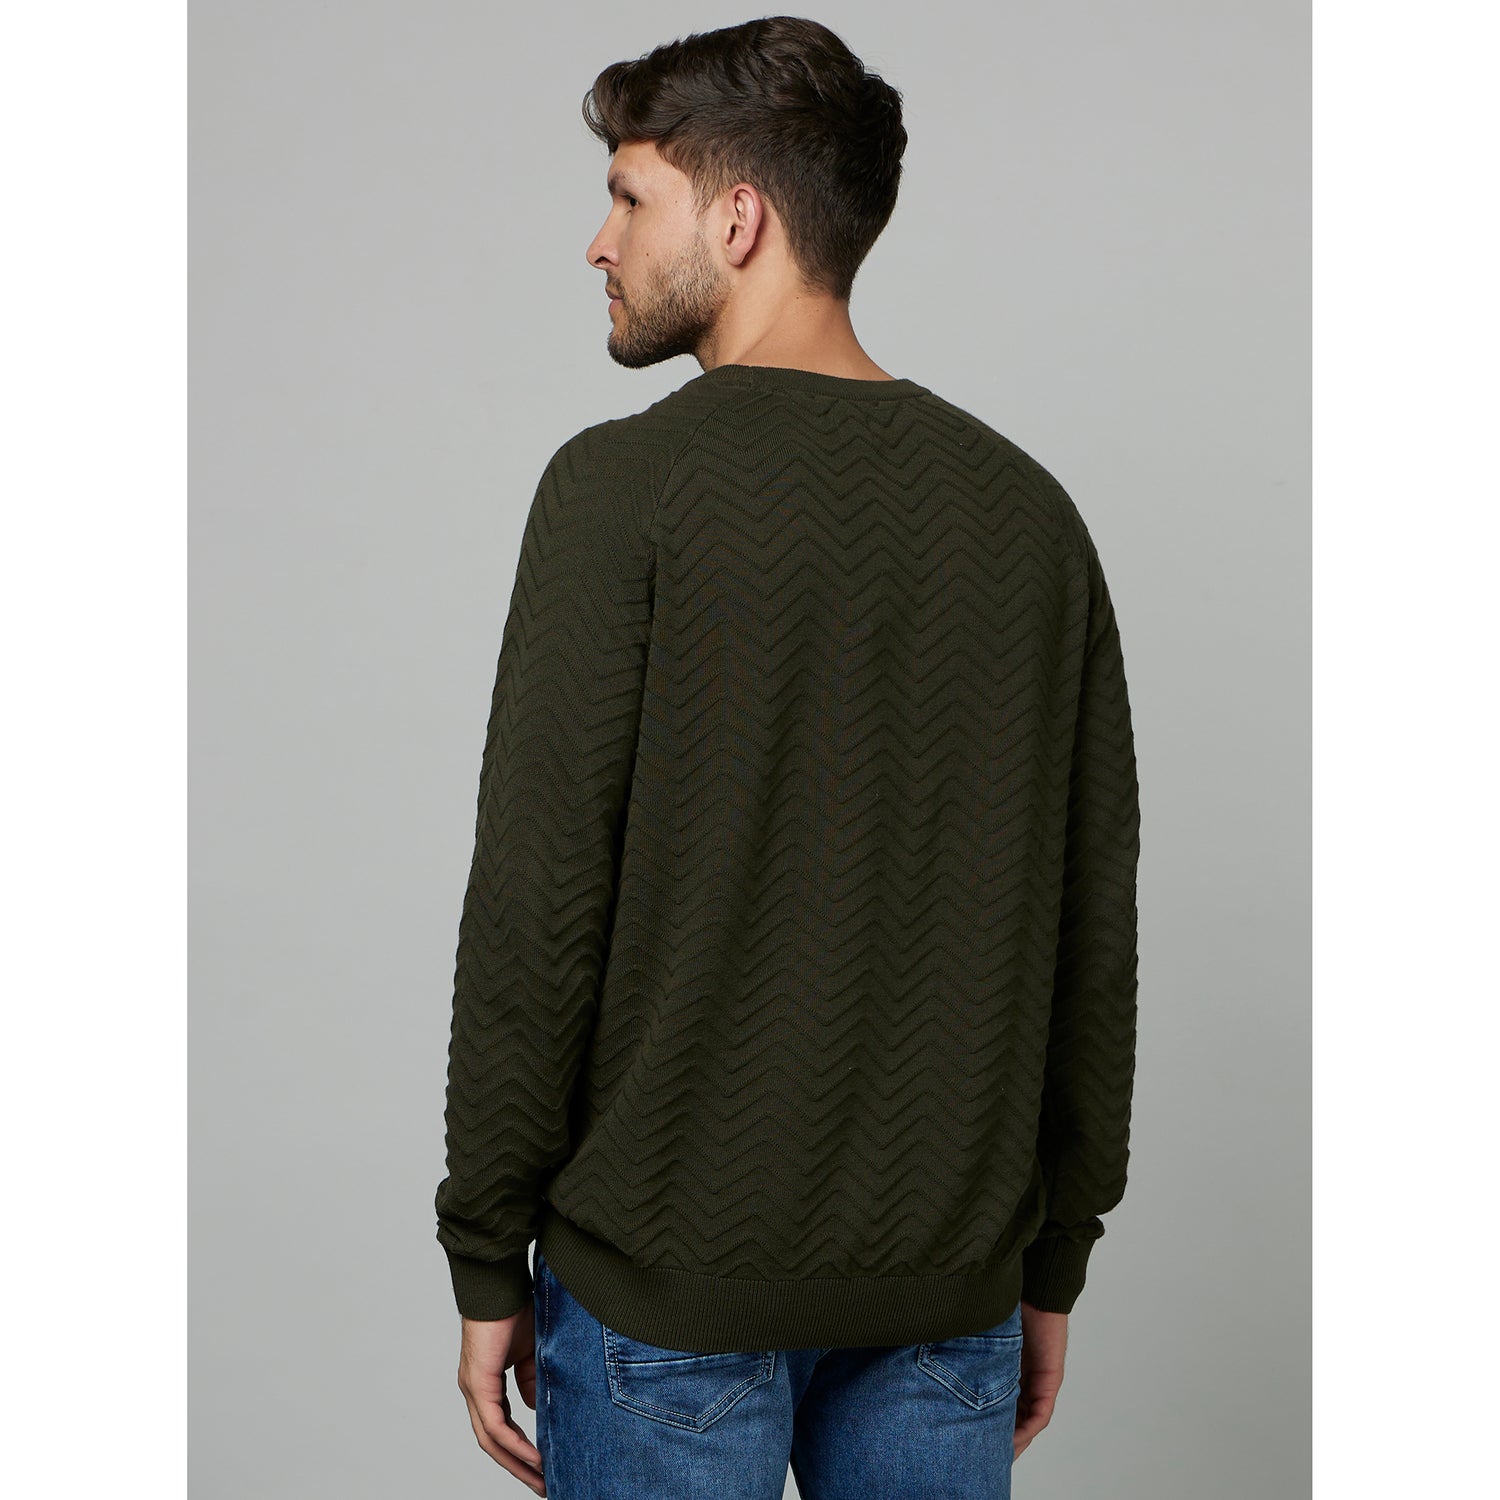 Olive Green Self Design Cotton Pullover Sweater (FECHEVRON)